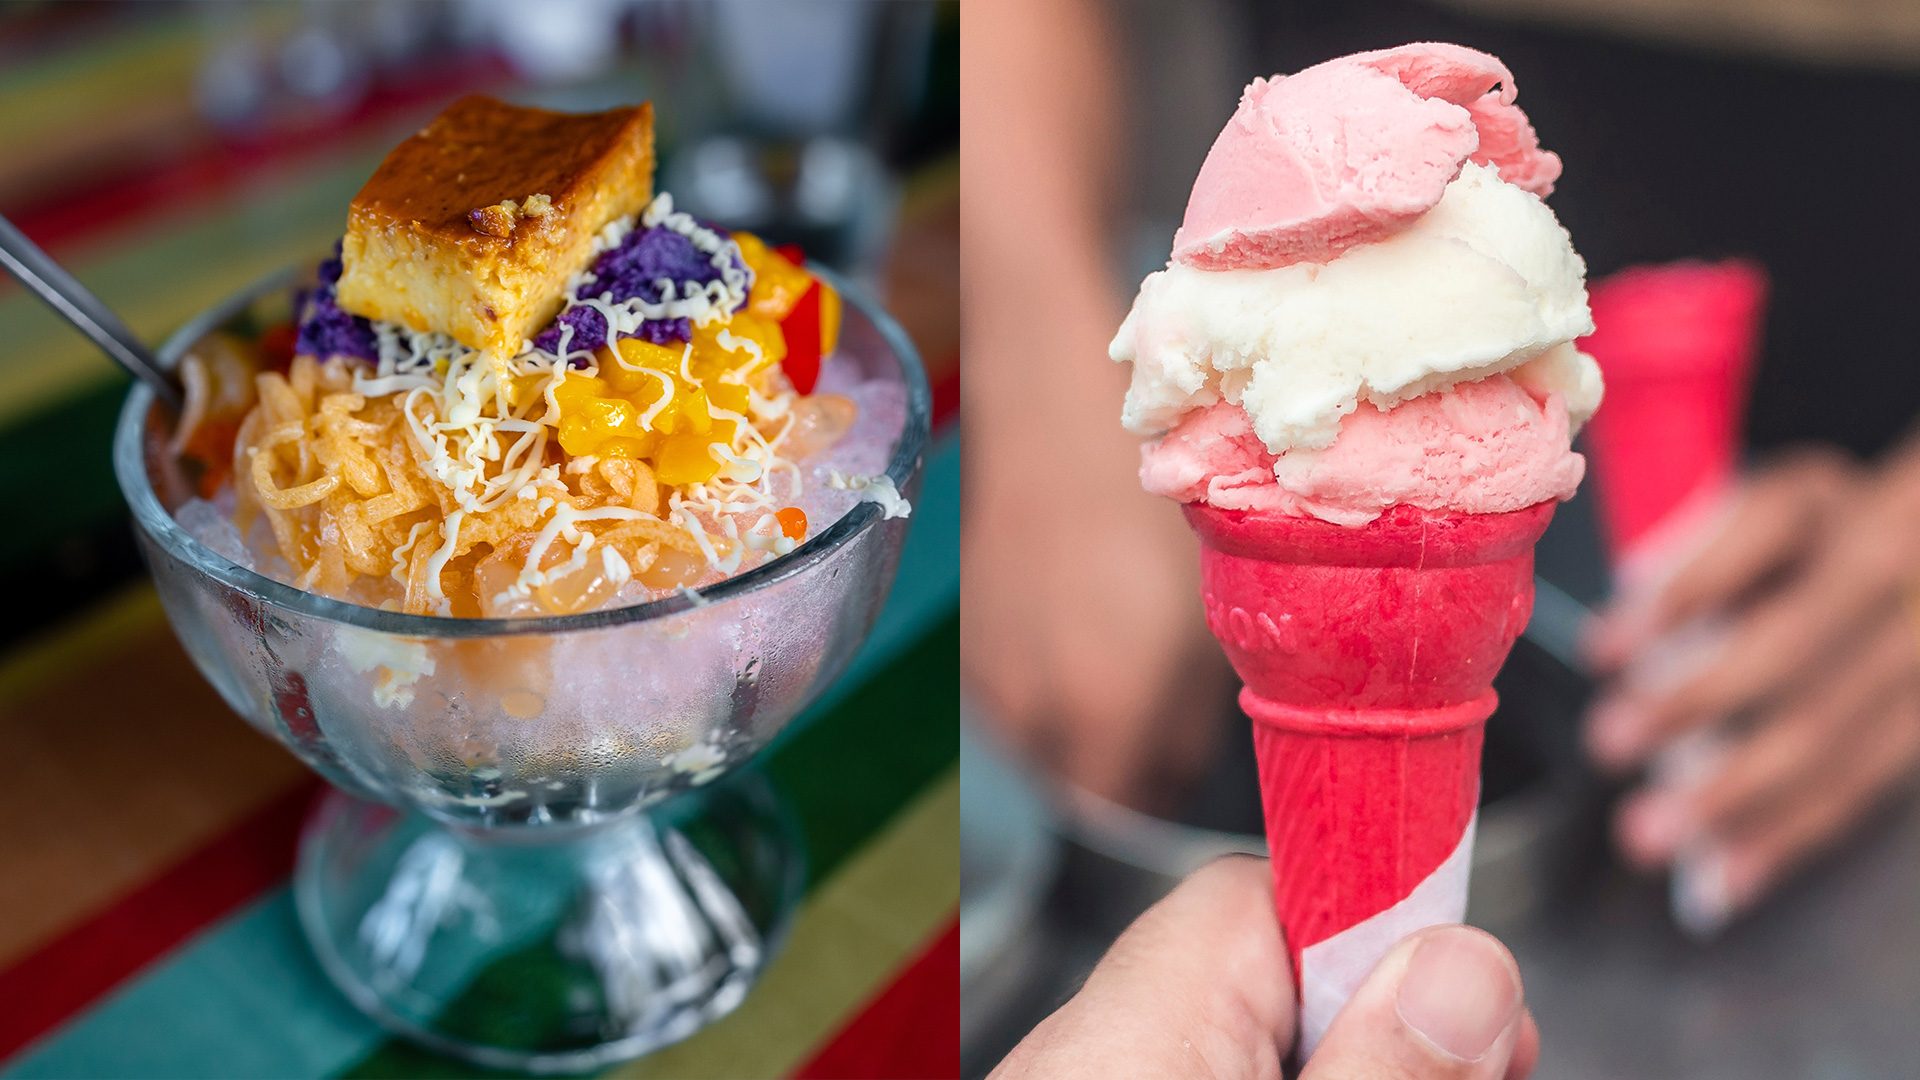 Dasorb! Sorbetes, halo-halo among World’s Best Frozen Desserts, according to Taste Atlas